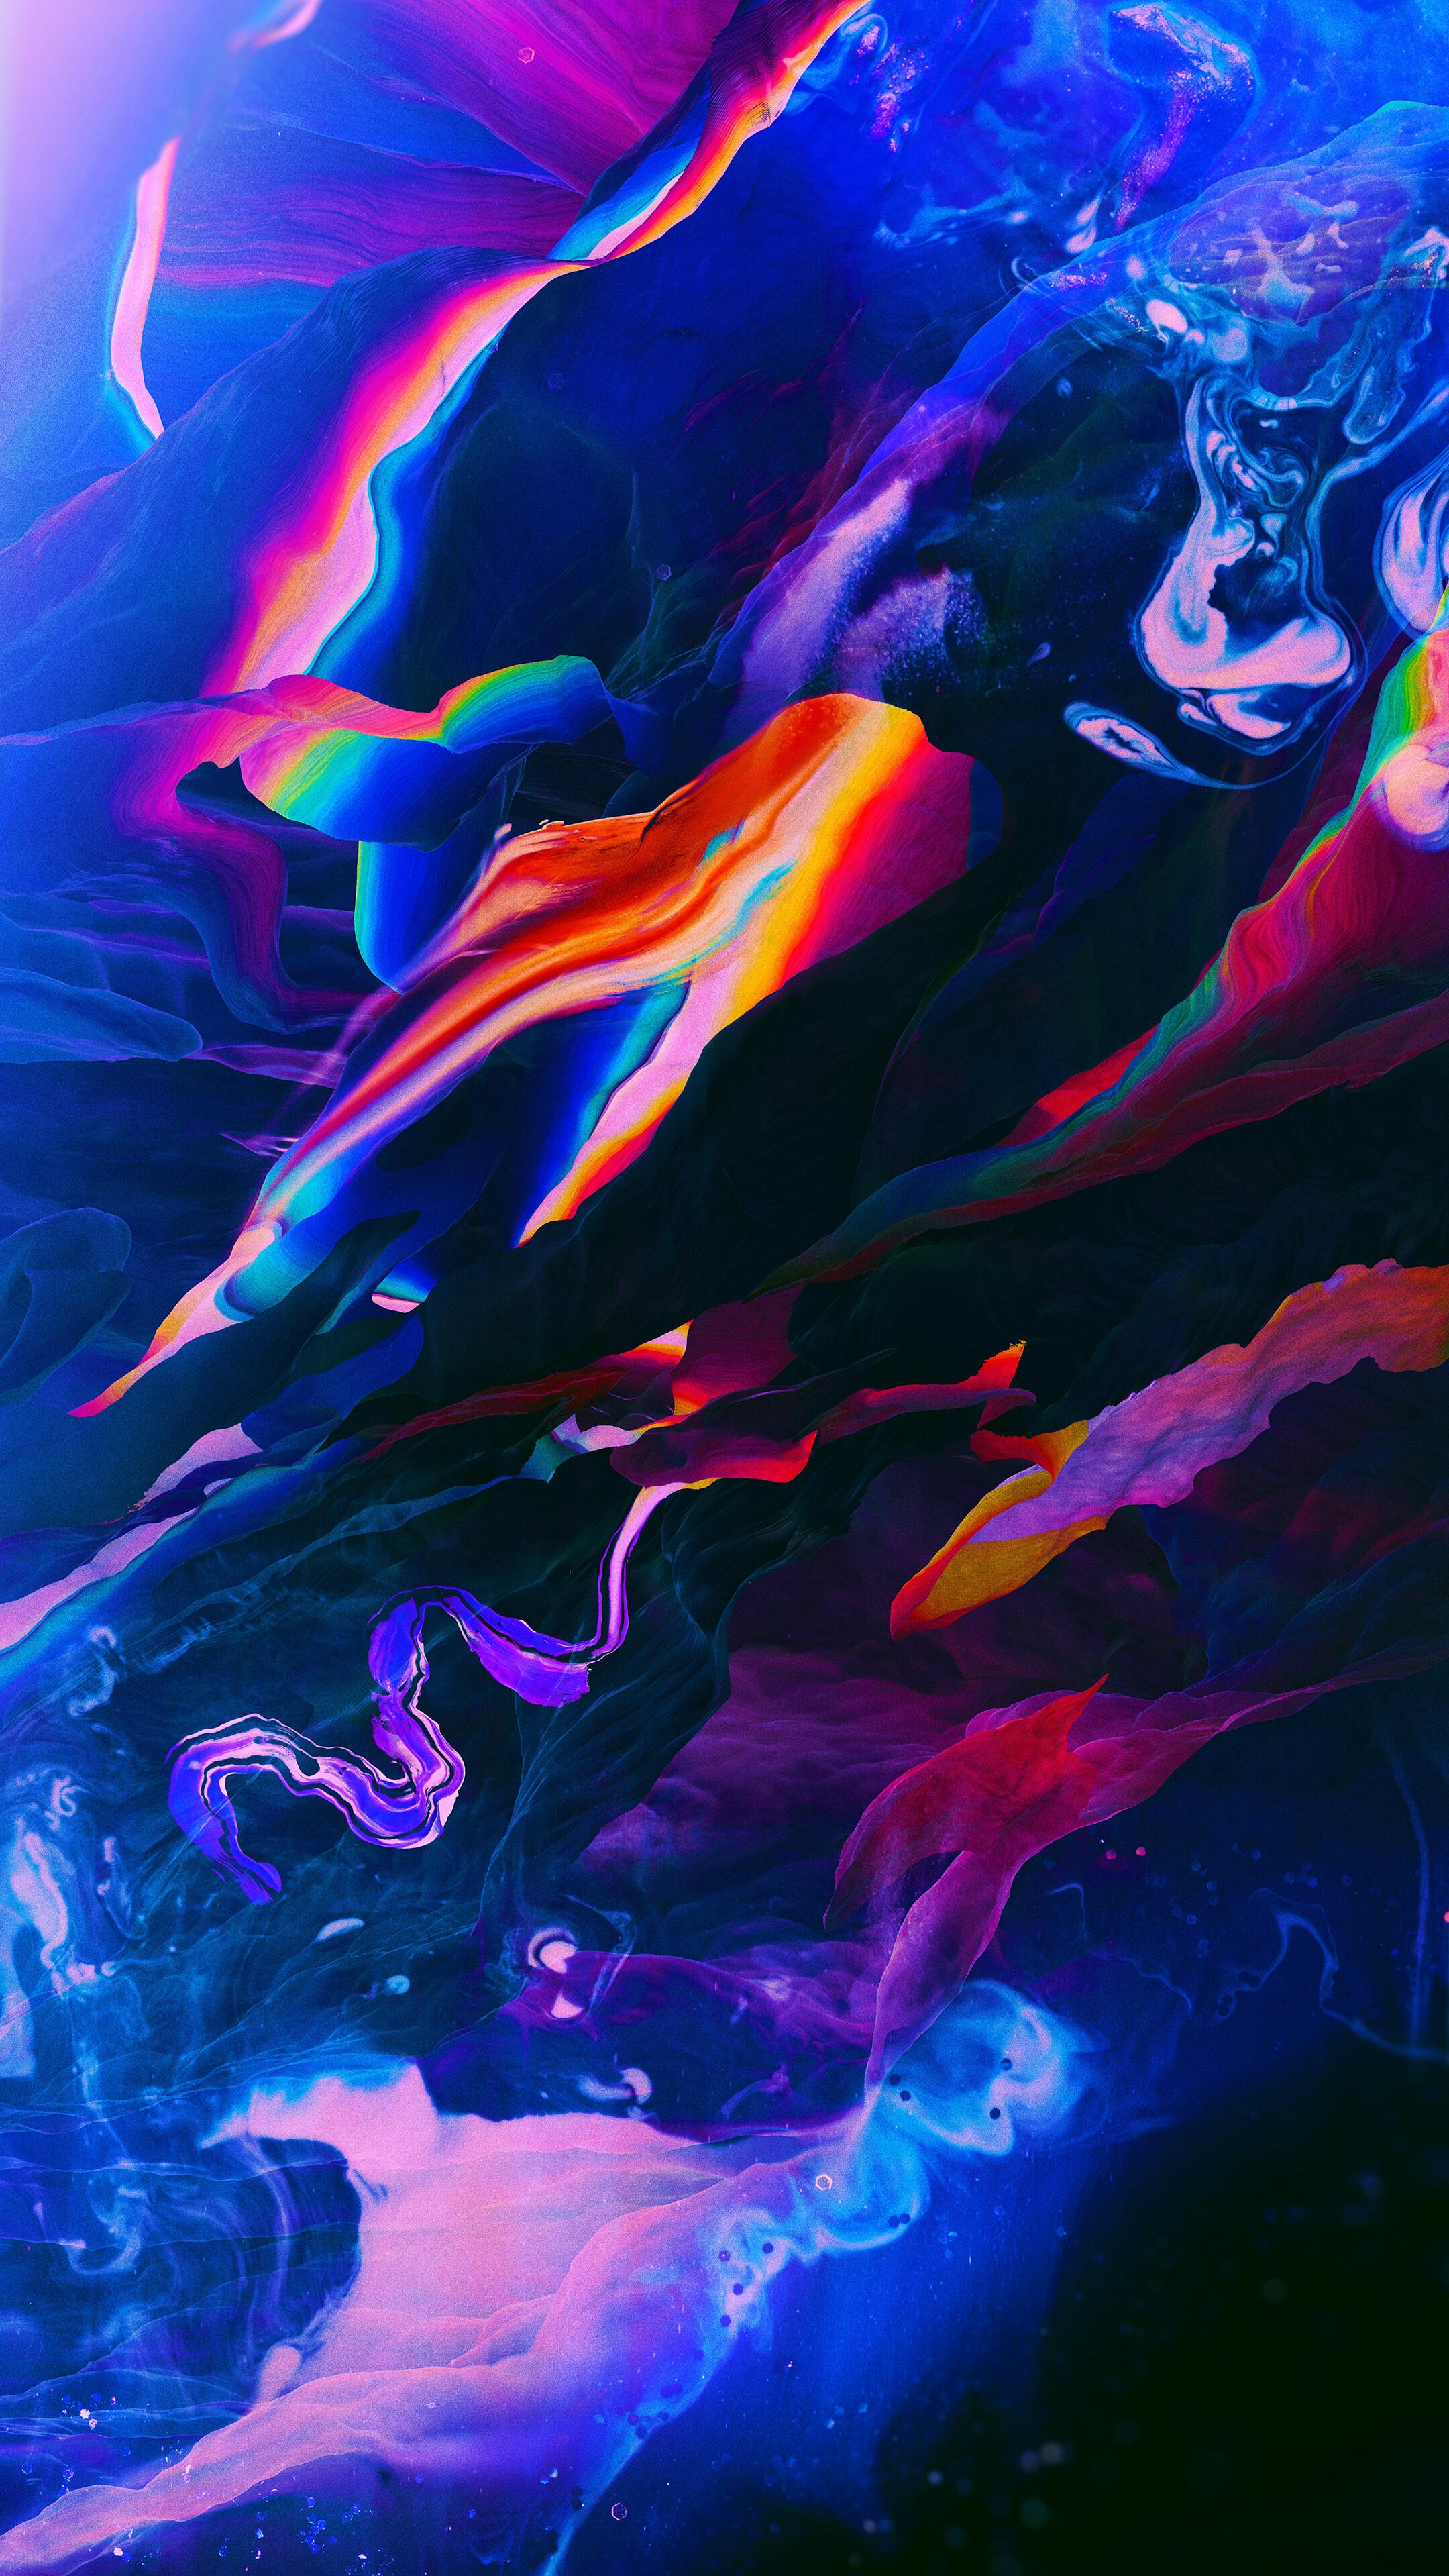 Colorful Abstract Digital Art 8k Wallpaper